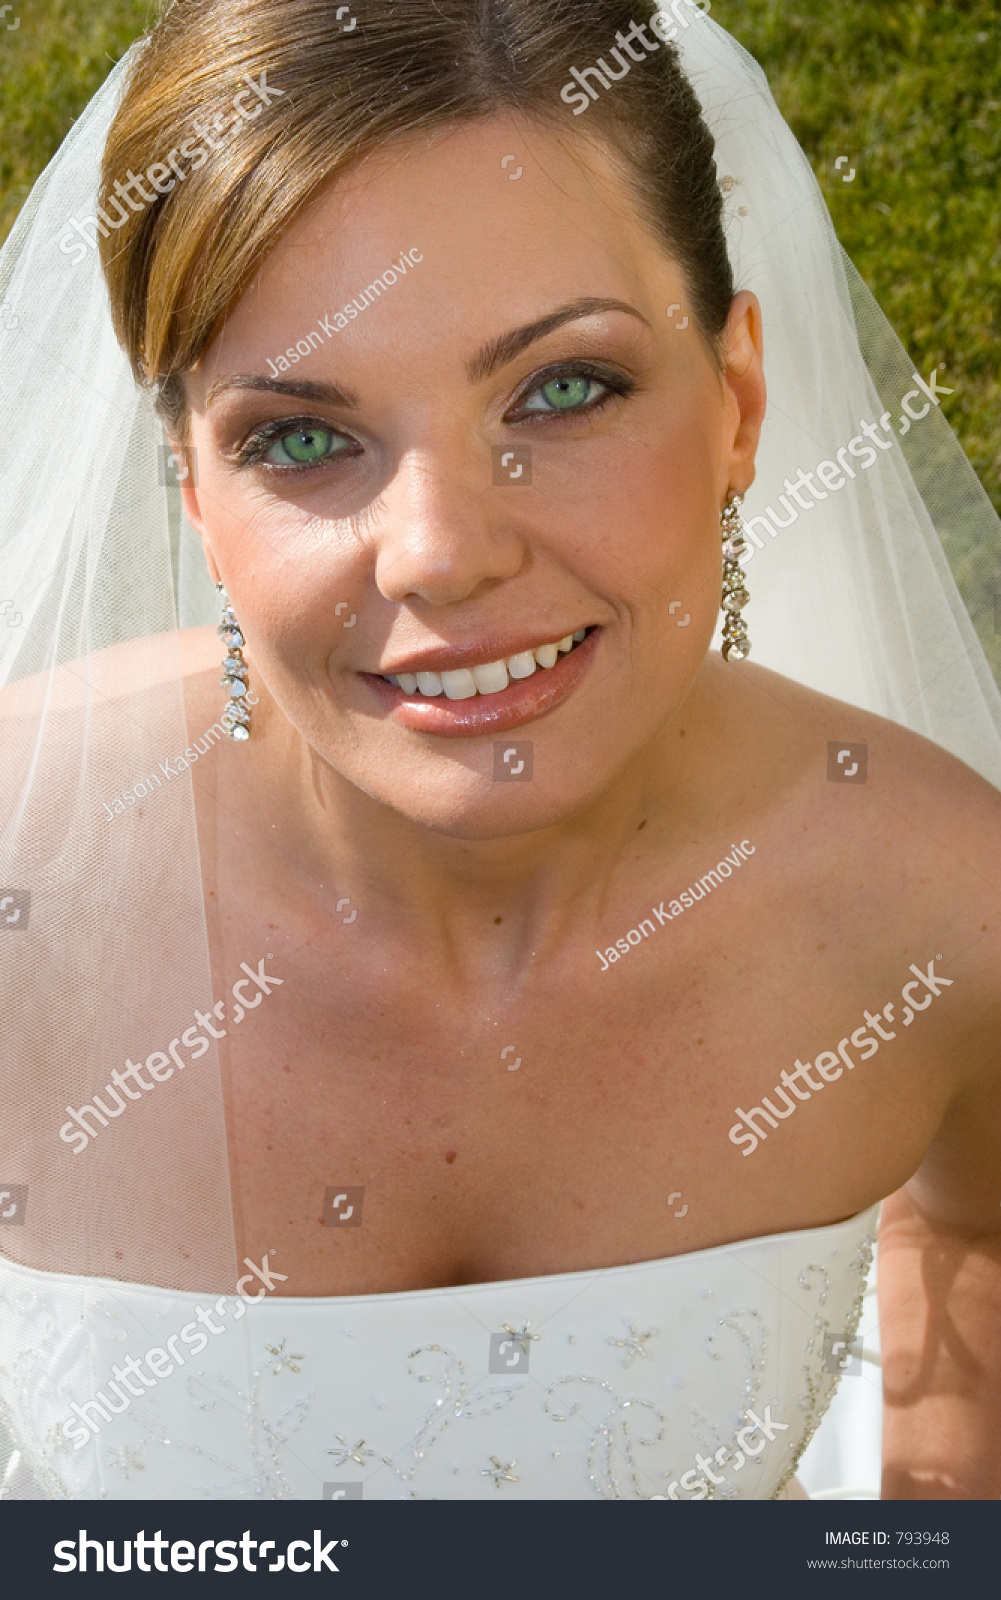 Photos Shutterstock Beautiful Bride Photos 16